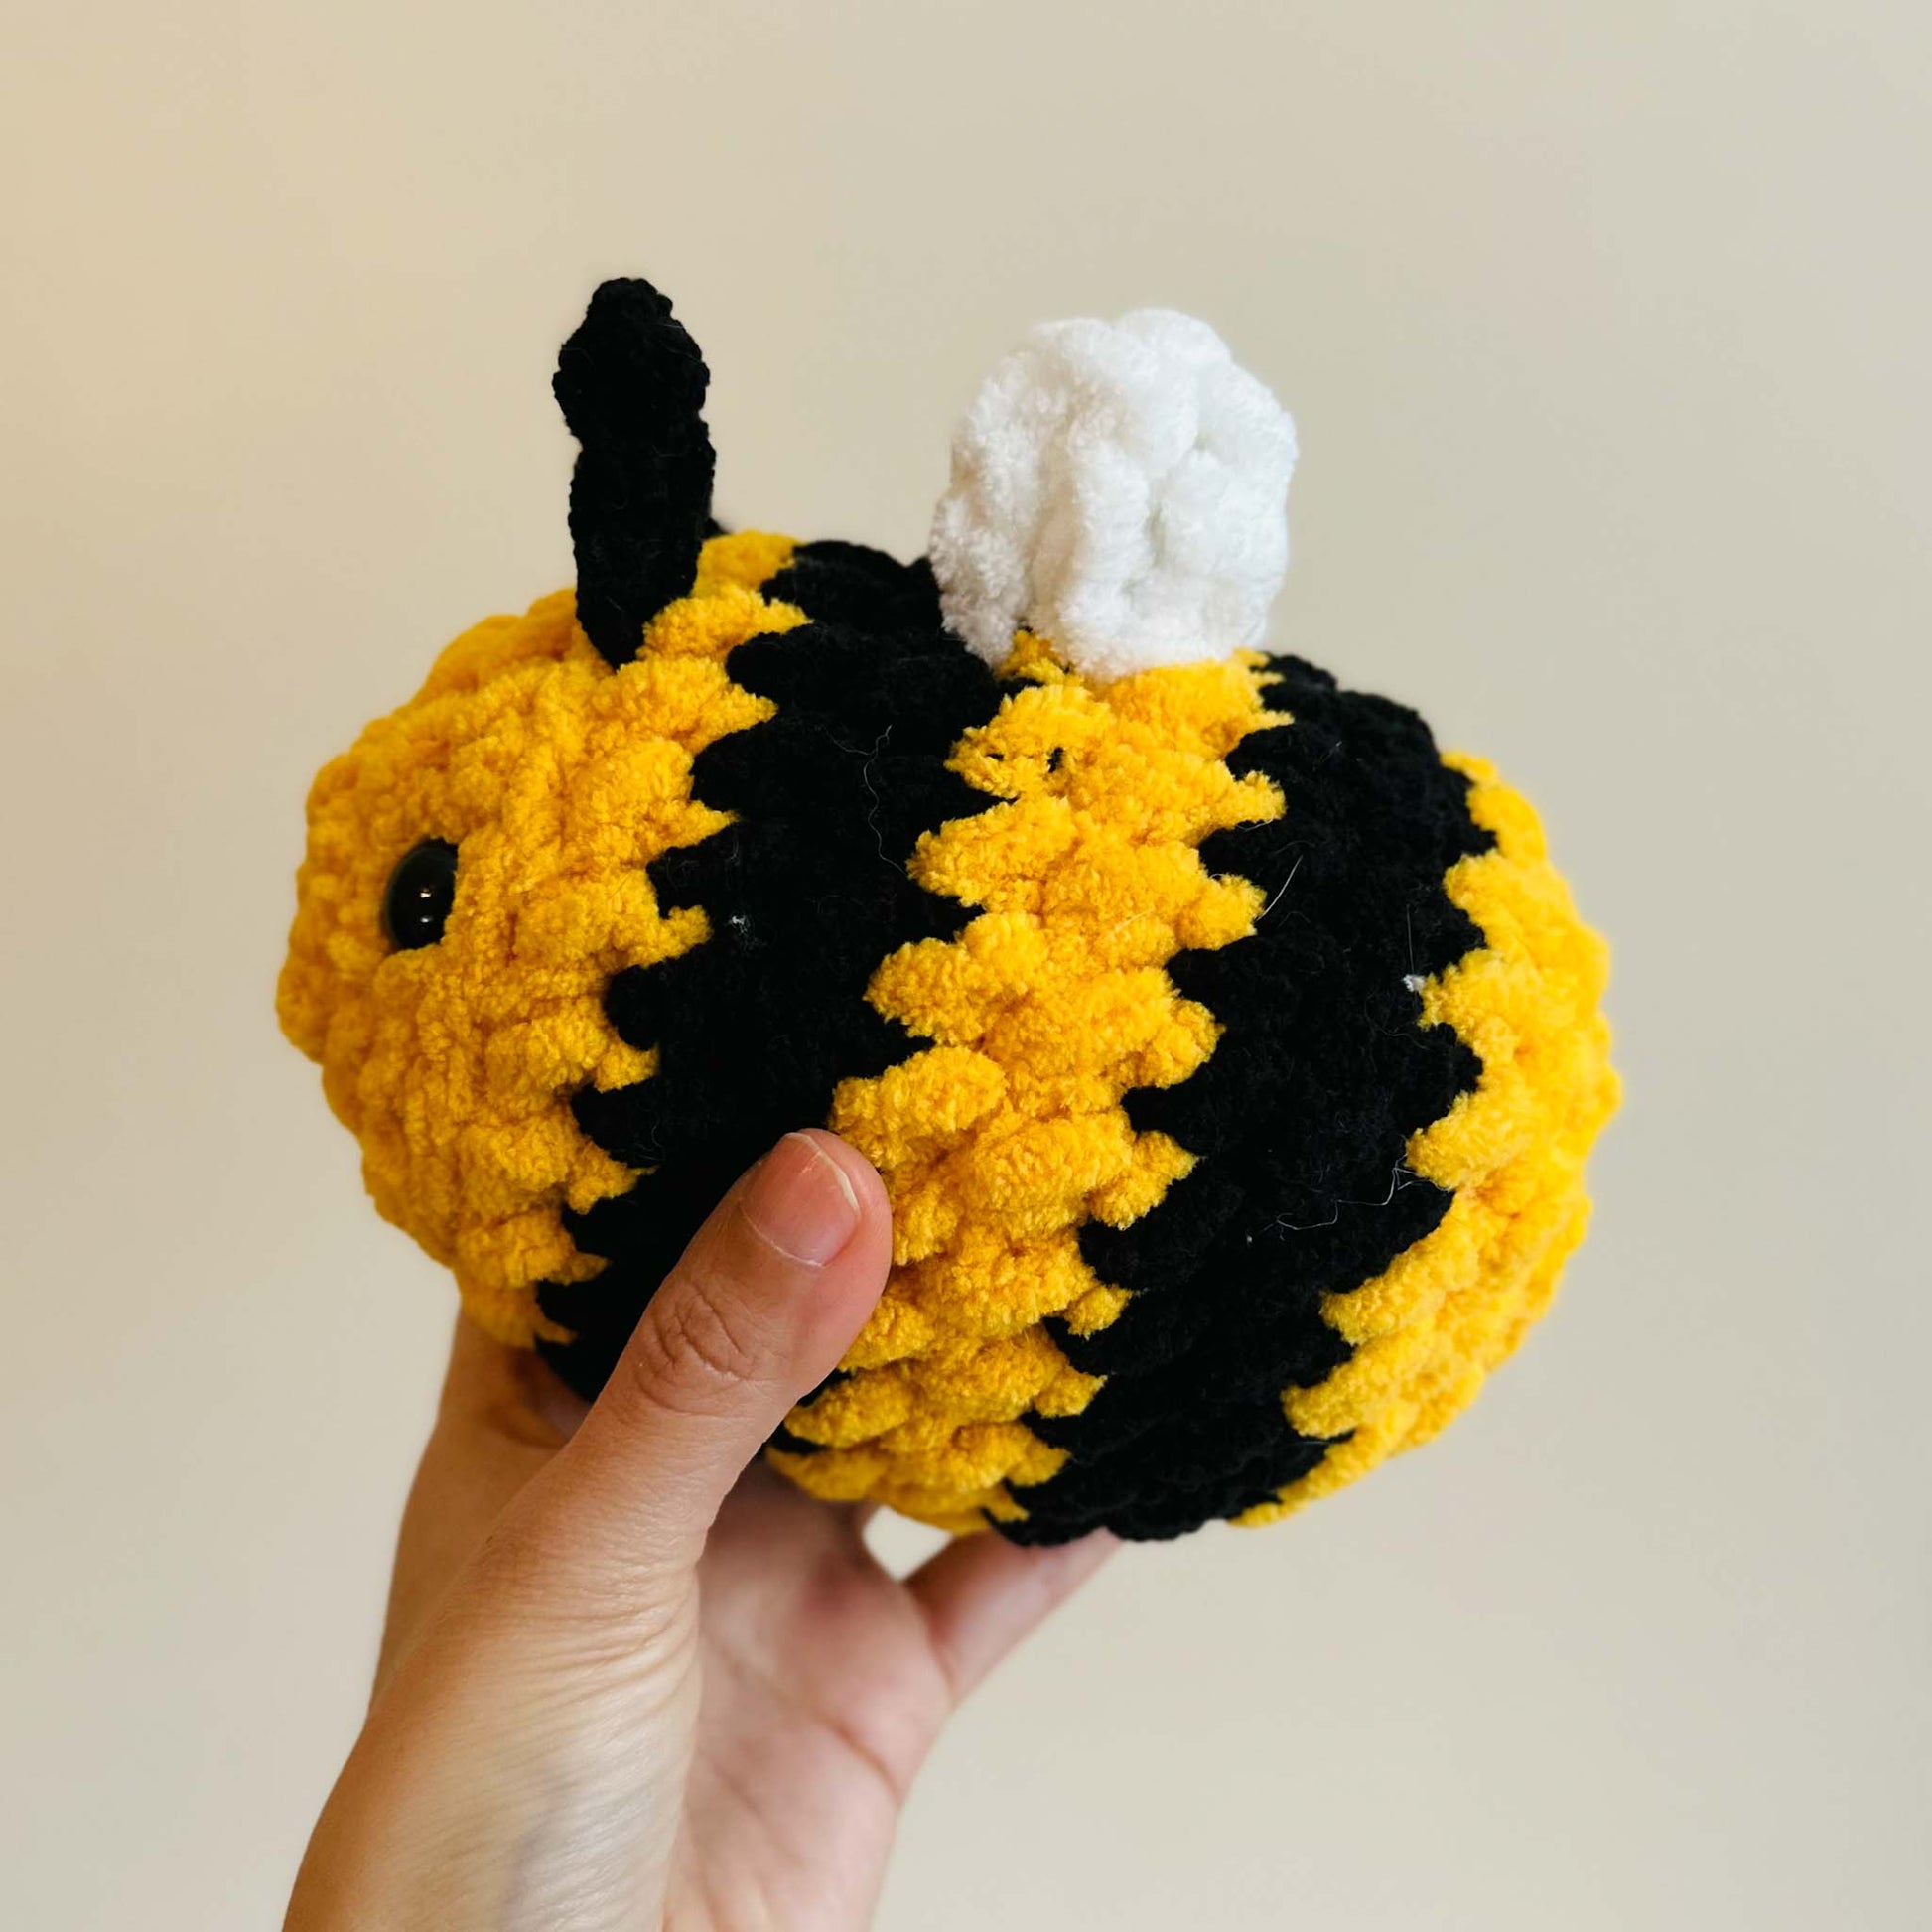 New Handmade Crochet Bumble Bee Stuffed Animal, 6” Long Crochet Amigurumi  Toy